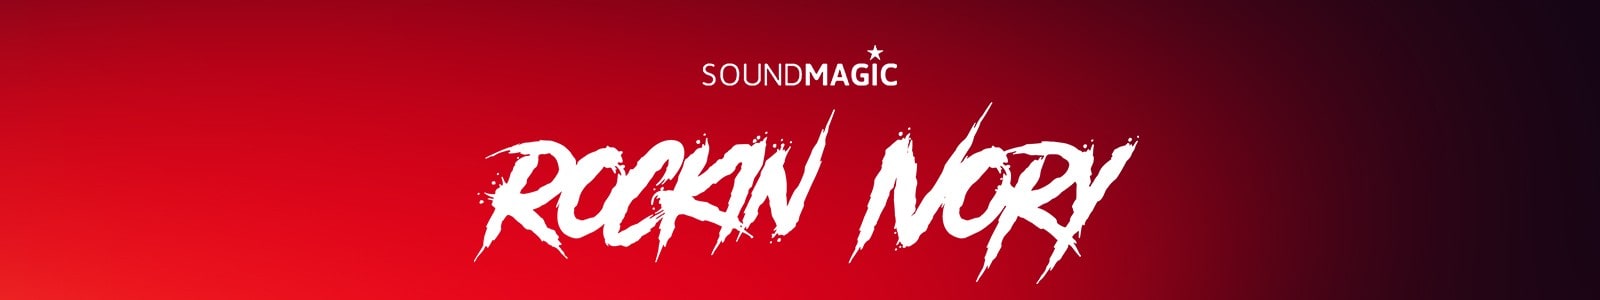 SoundMagic Rockin’ Ivory